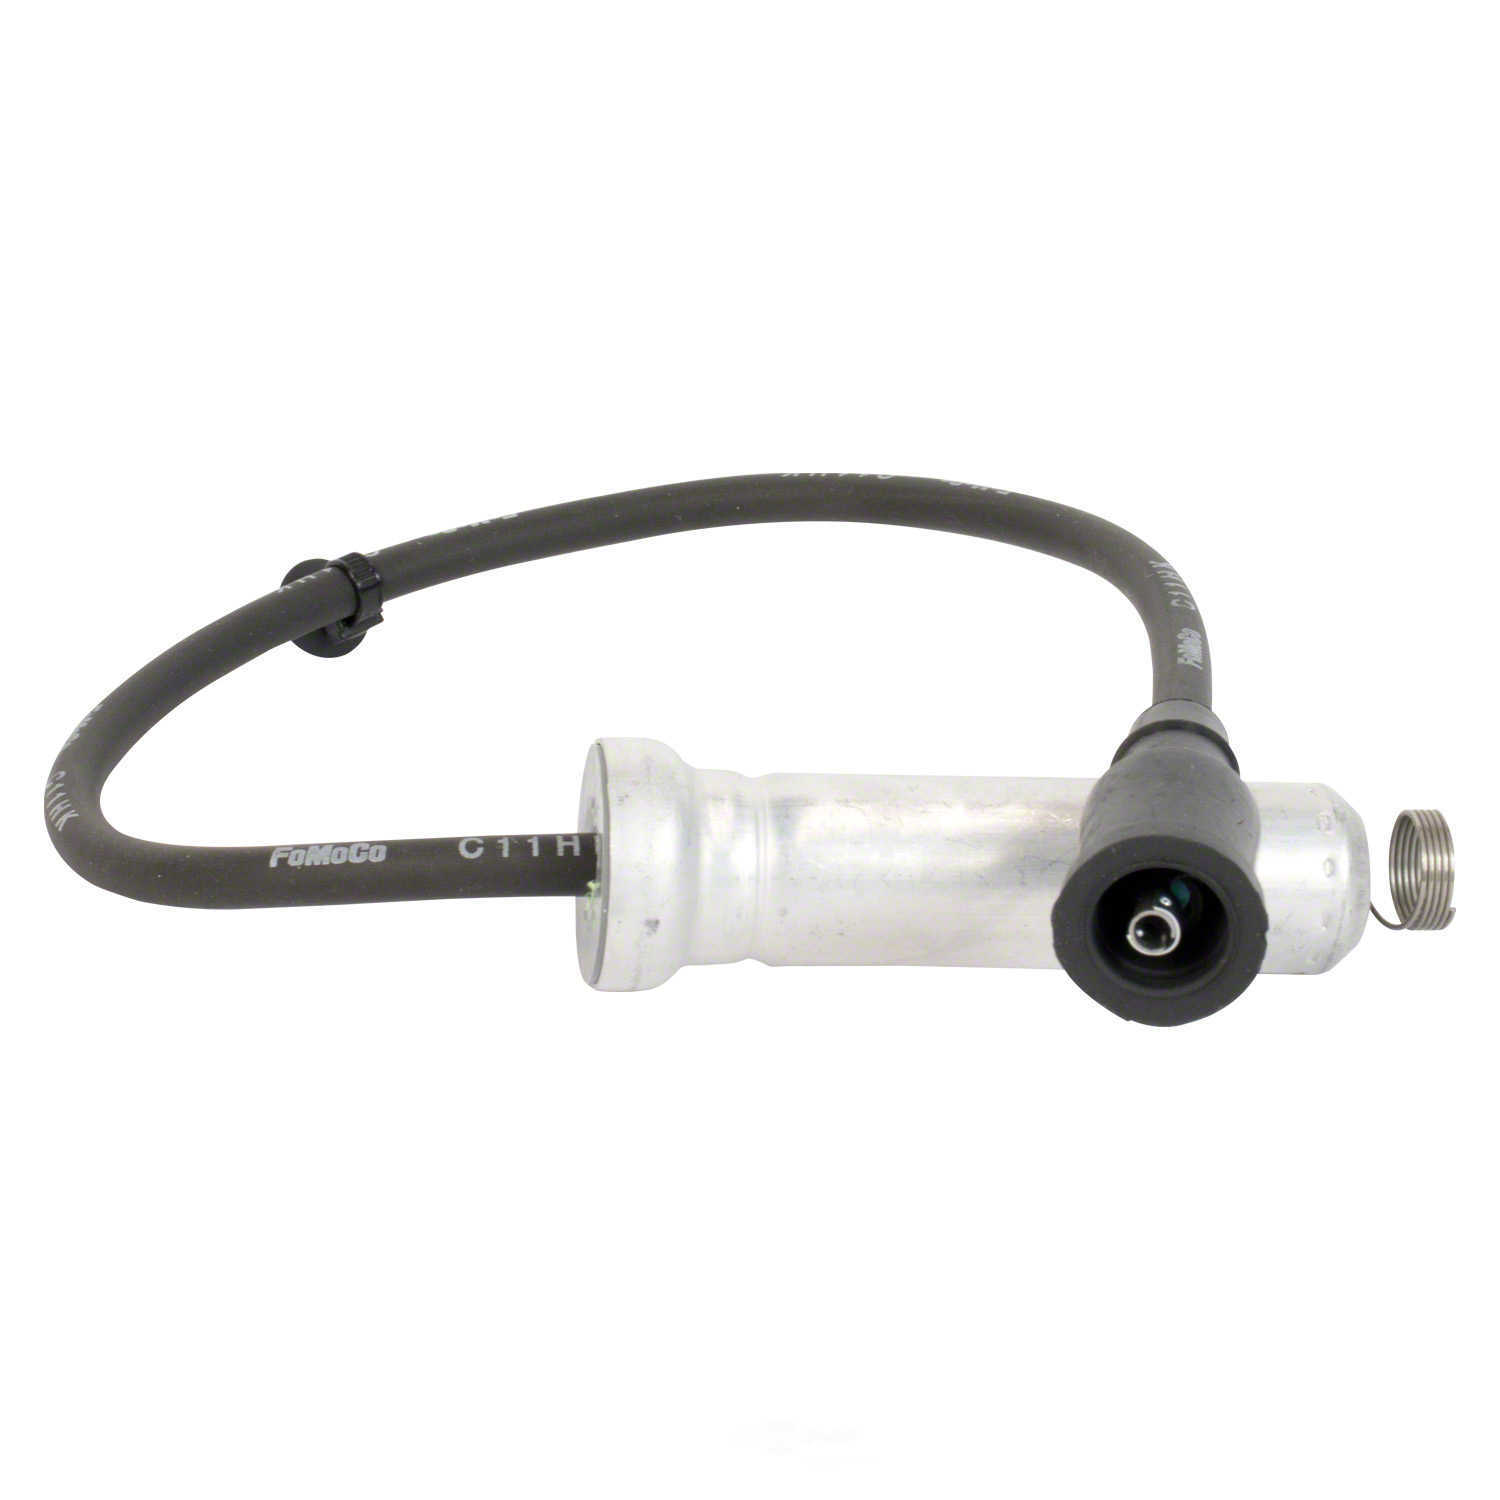 MOTORCRAFT - Single Lead Spark Plug Wire - MOT WR-6149